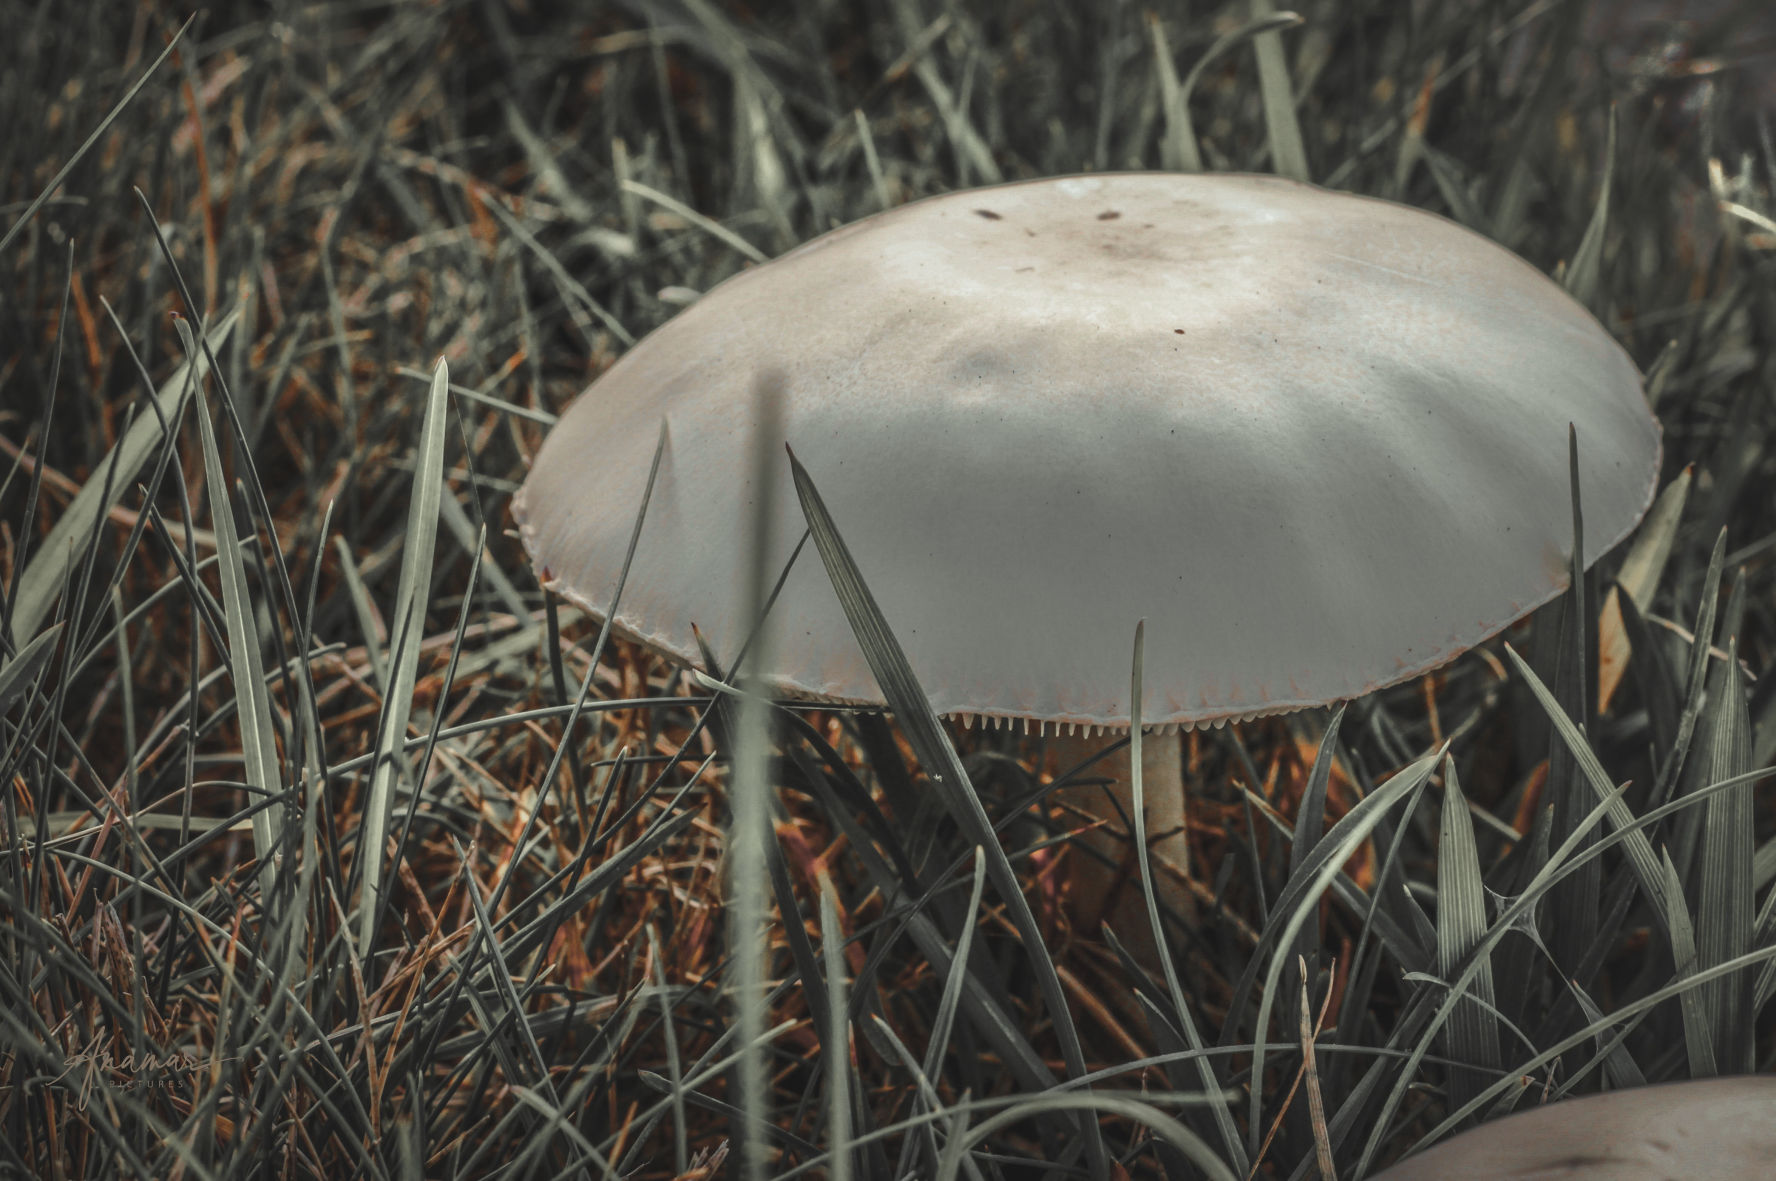 Mushroom in the garden | Snohomish, Washington, USA